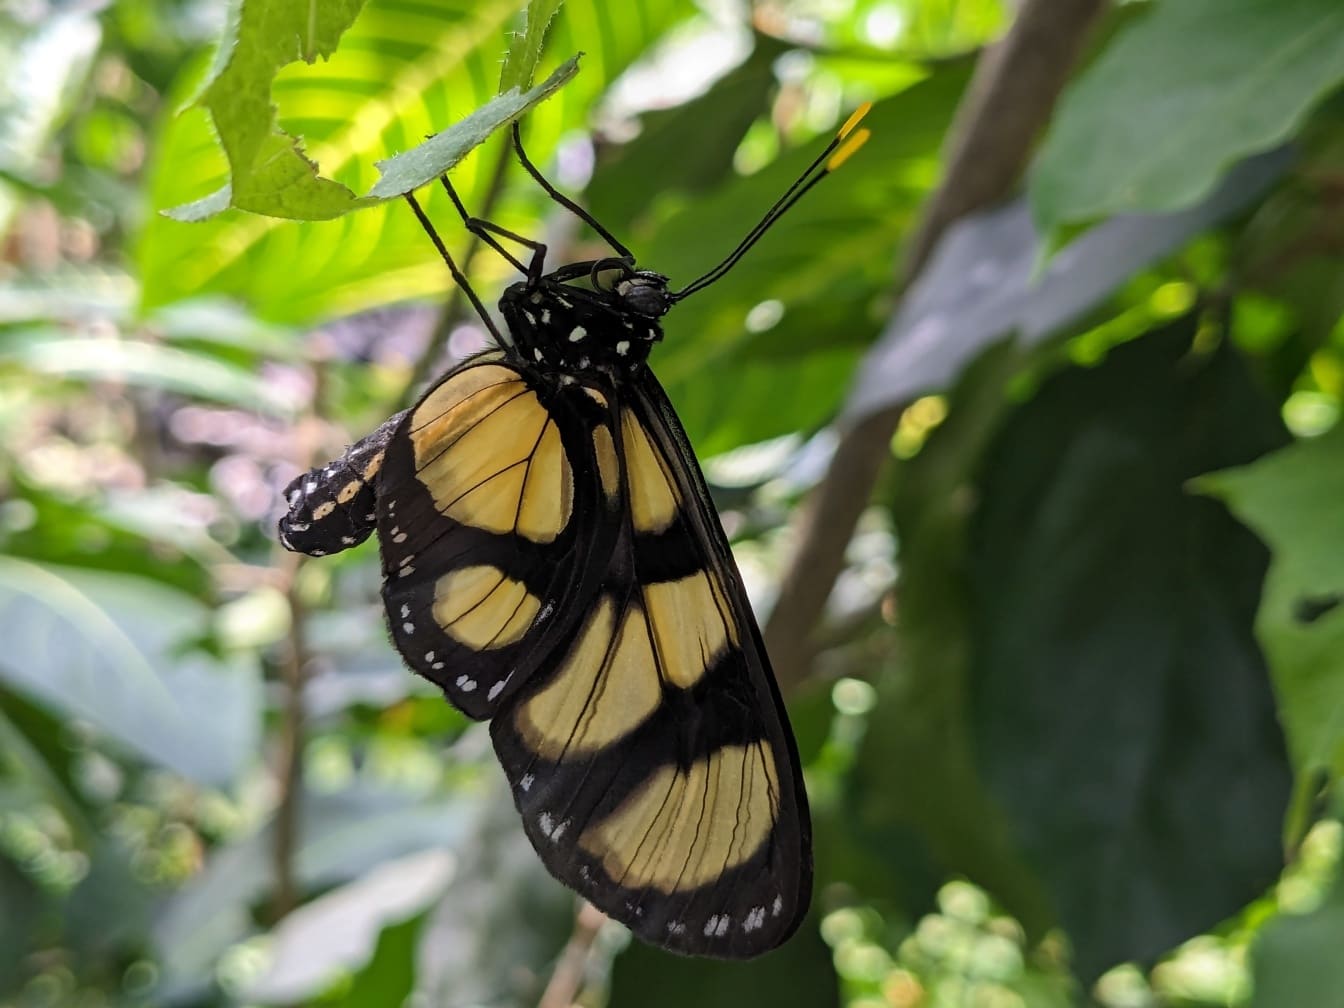 Motyl Themisto bursztynowoskrzydły (Methona themisto) gatunki endemiczne